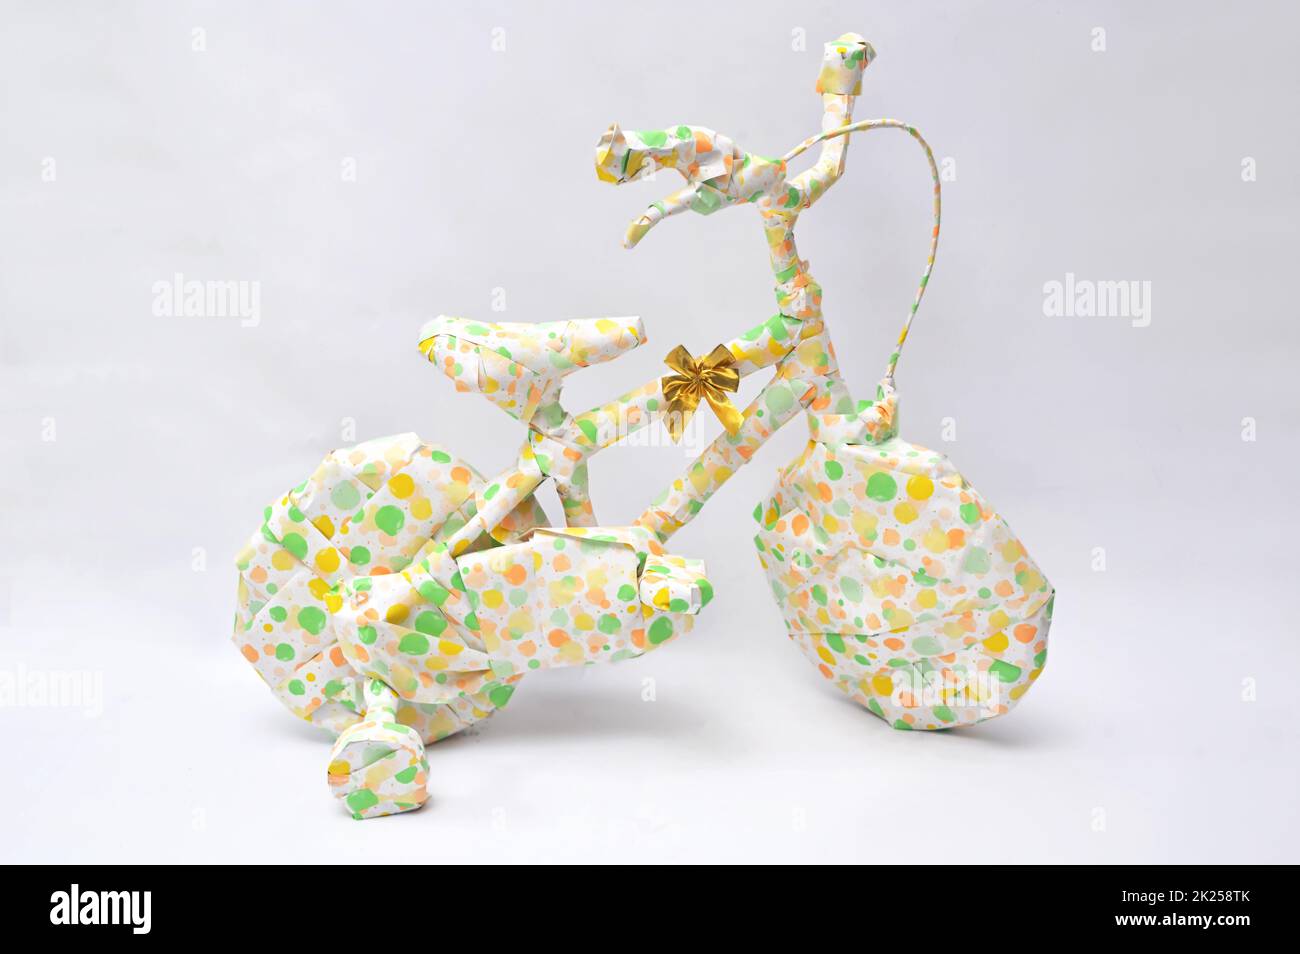 Fun Secret Gift. Bike with Wheels In Playful Gift Wrap Stock Photo